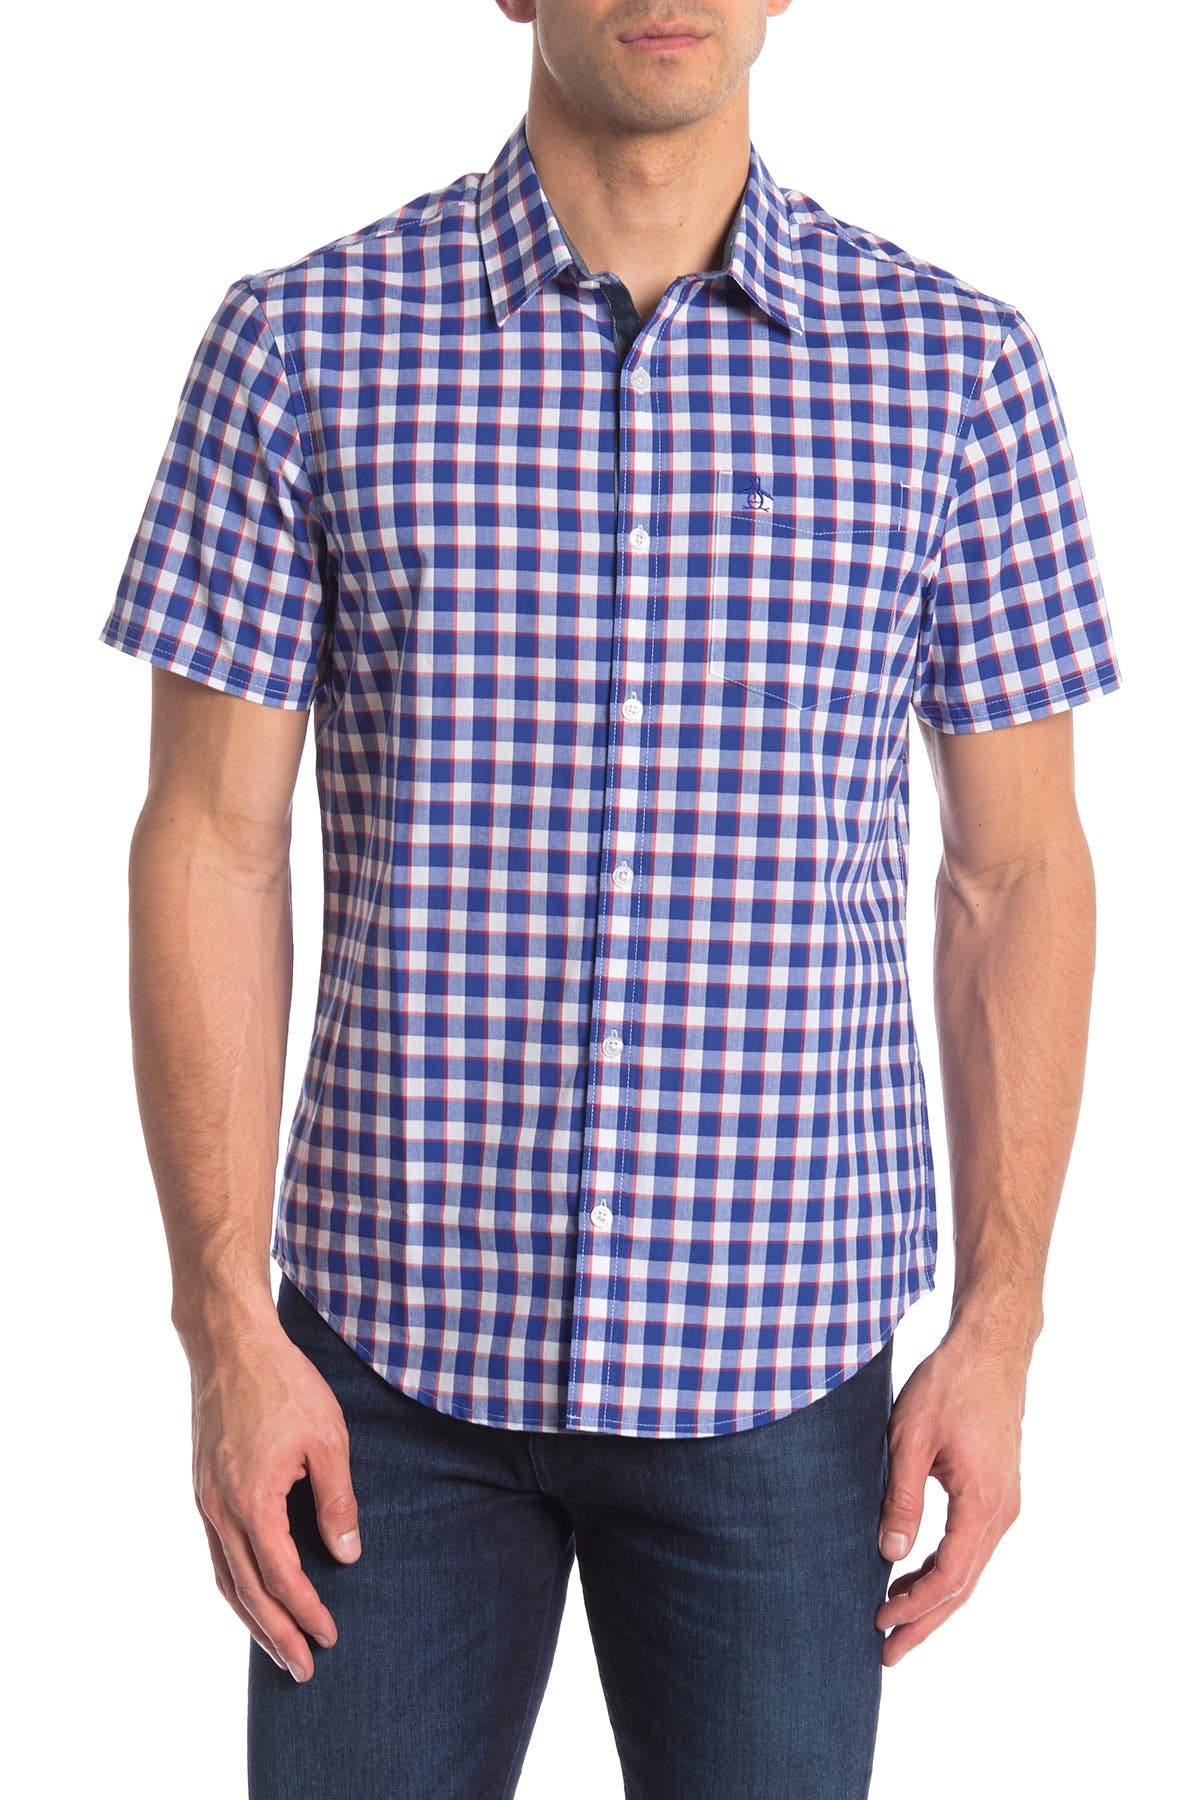 Original Penguin Checkered Short Sleeve Regular Fit Shirt In Open Blue6